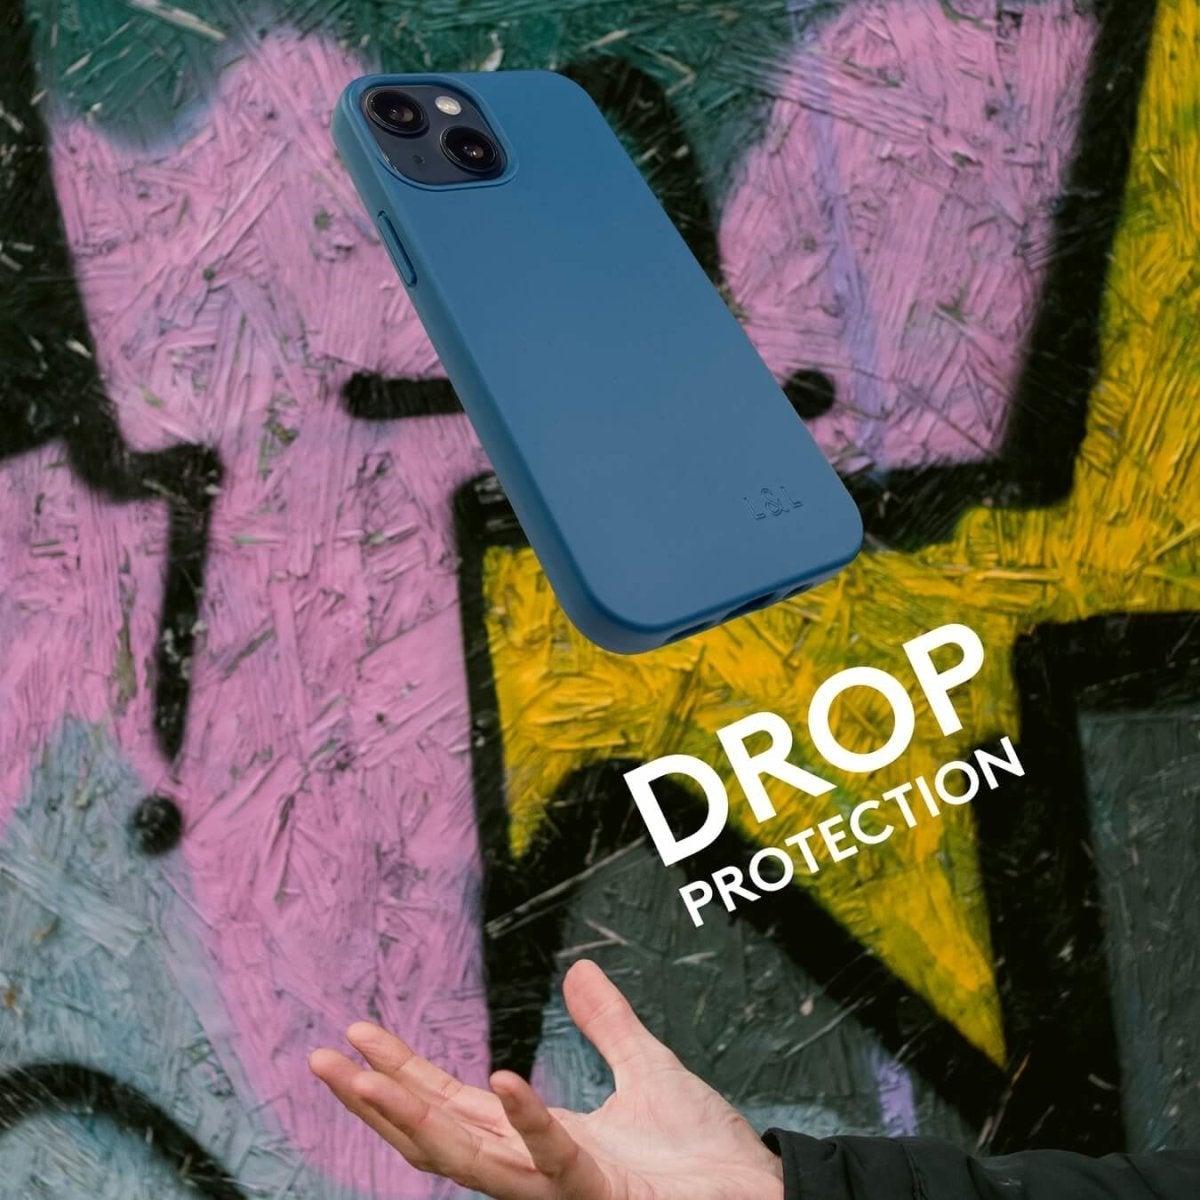 Sale - Biodegradable iPhone 13 Pro Case - Deep Blue - Loam & Lore